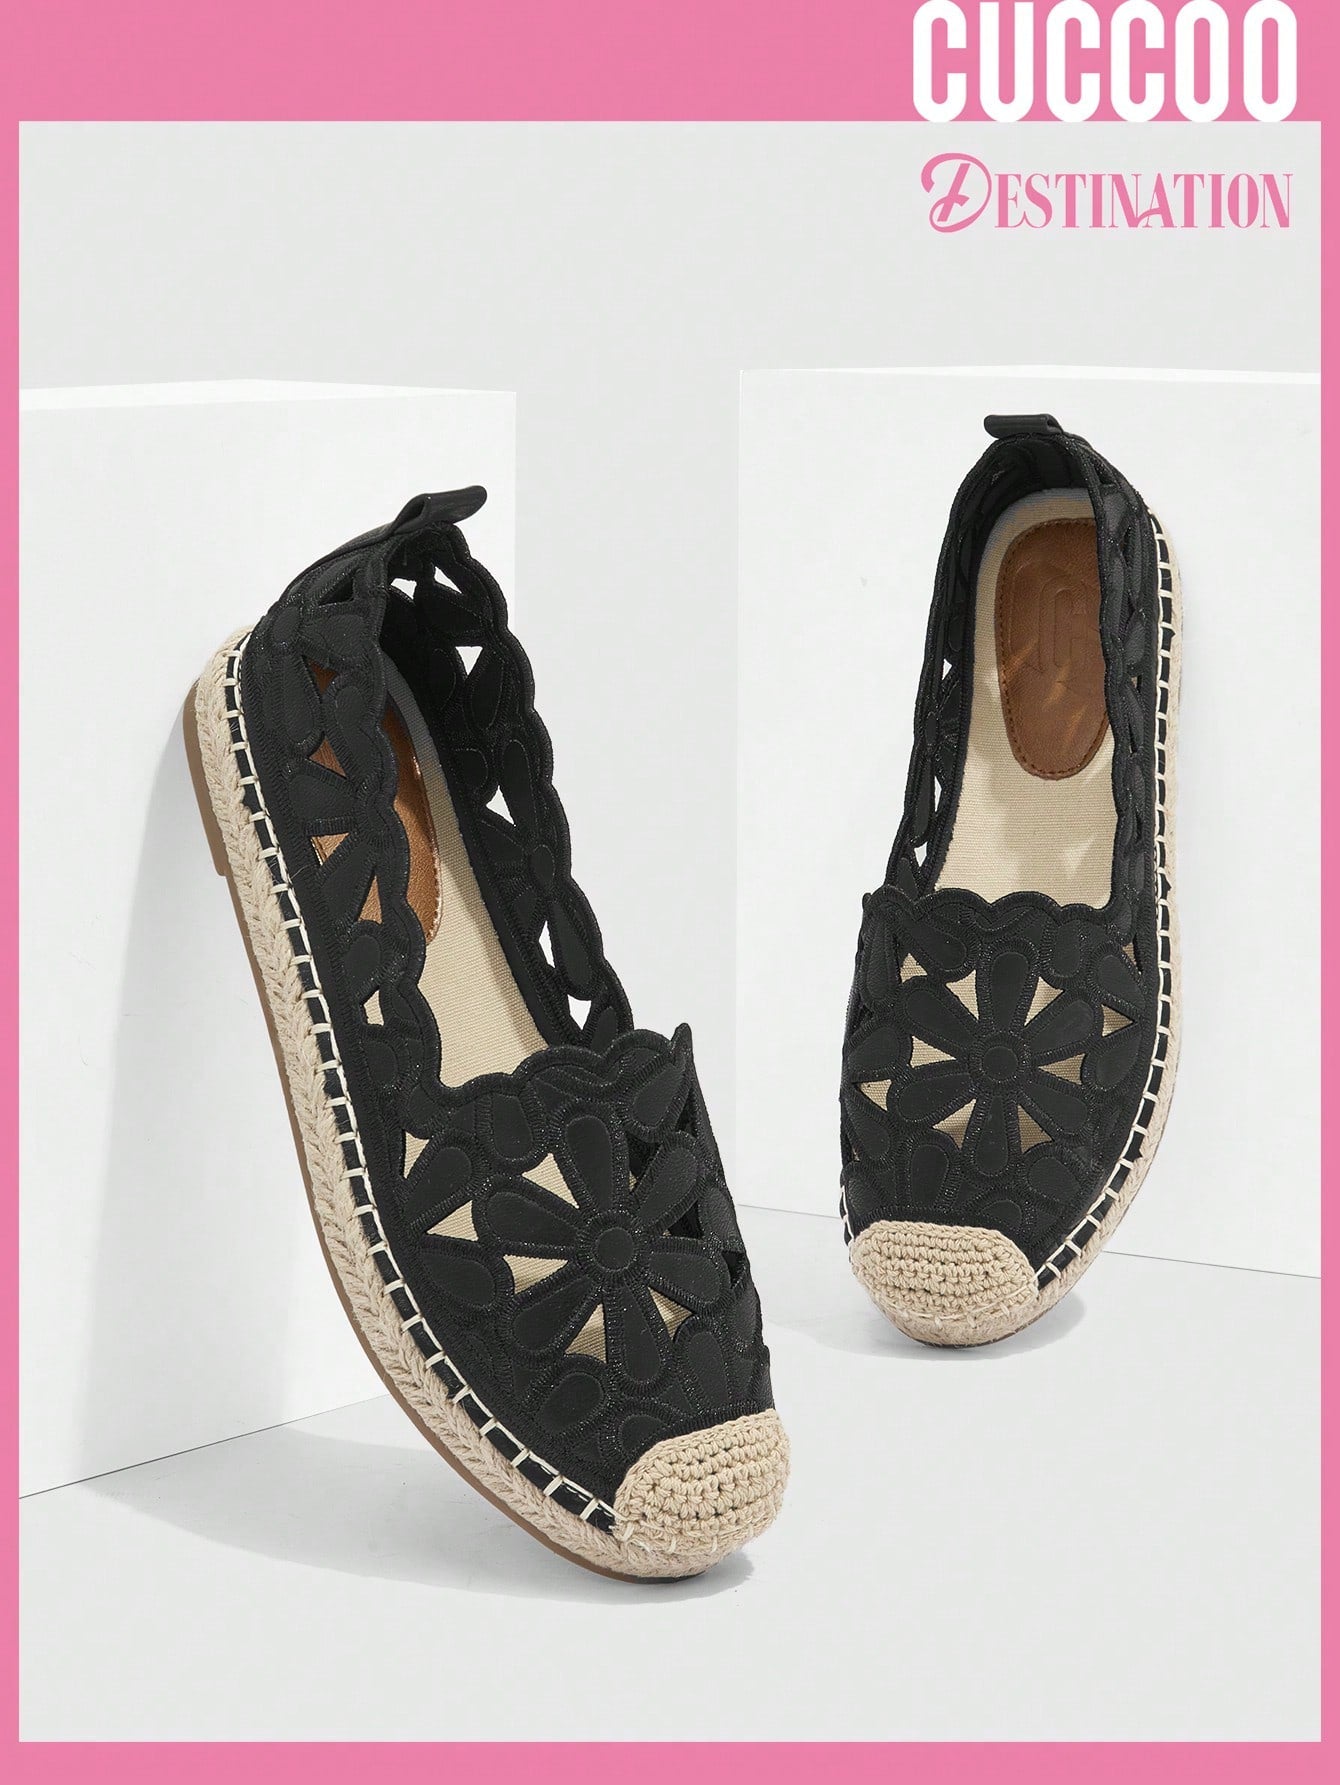 Cuccoo Destination Collection Women's Shoes Floral Embroidery Fashion Espadrille Black Flats